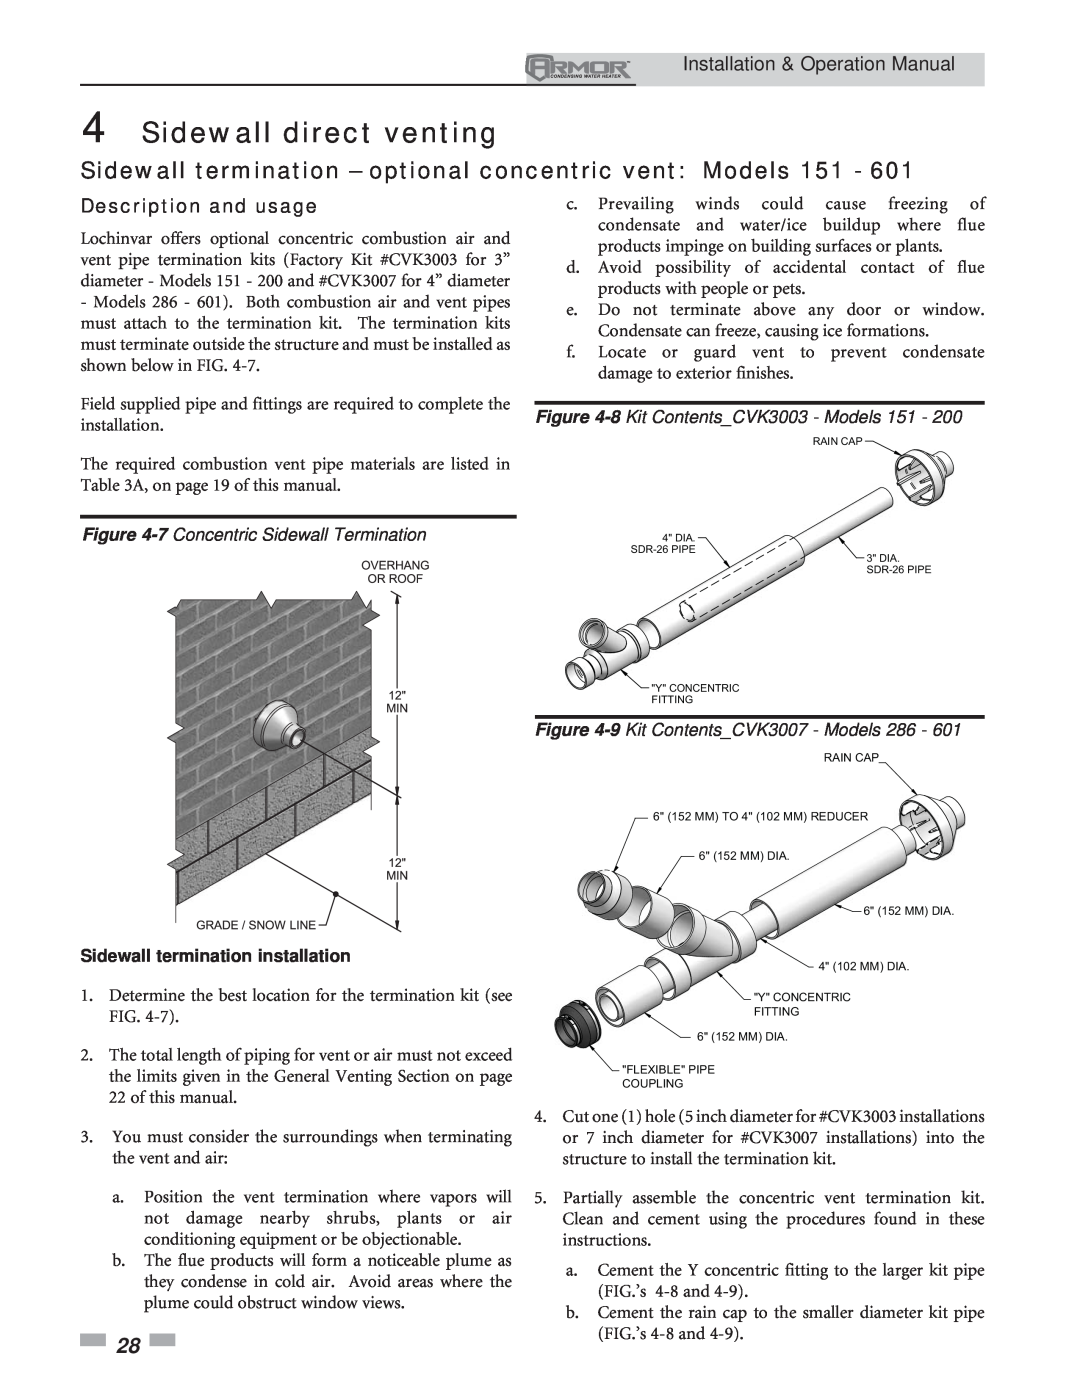 Lochinvar 151 operation manual Description and usage, 7 Concentric Sidewall Termination, Sidewall termination installation 